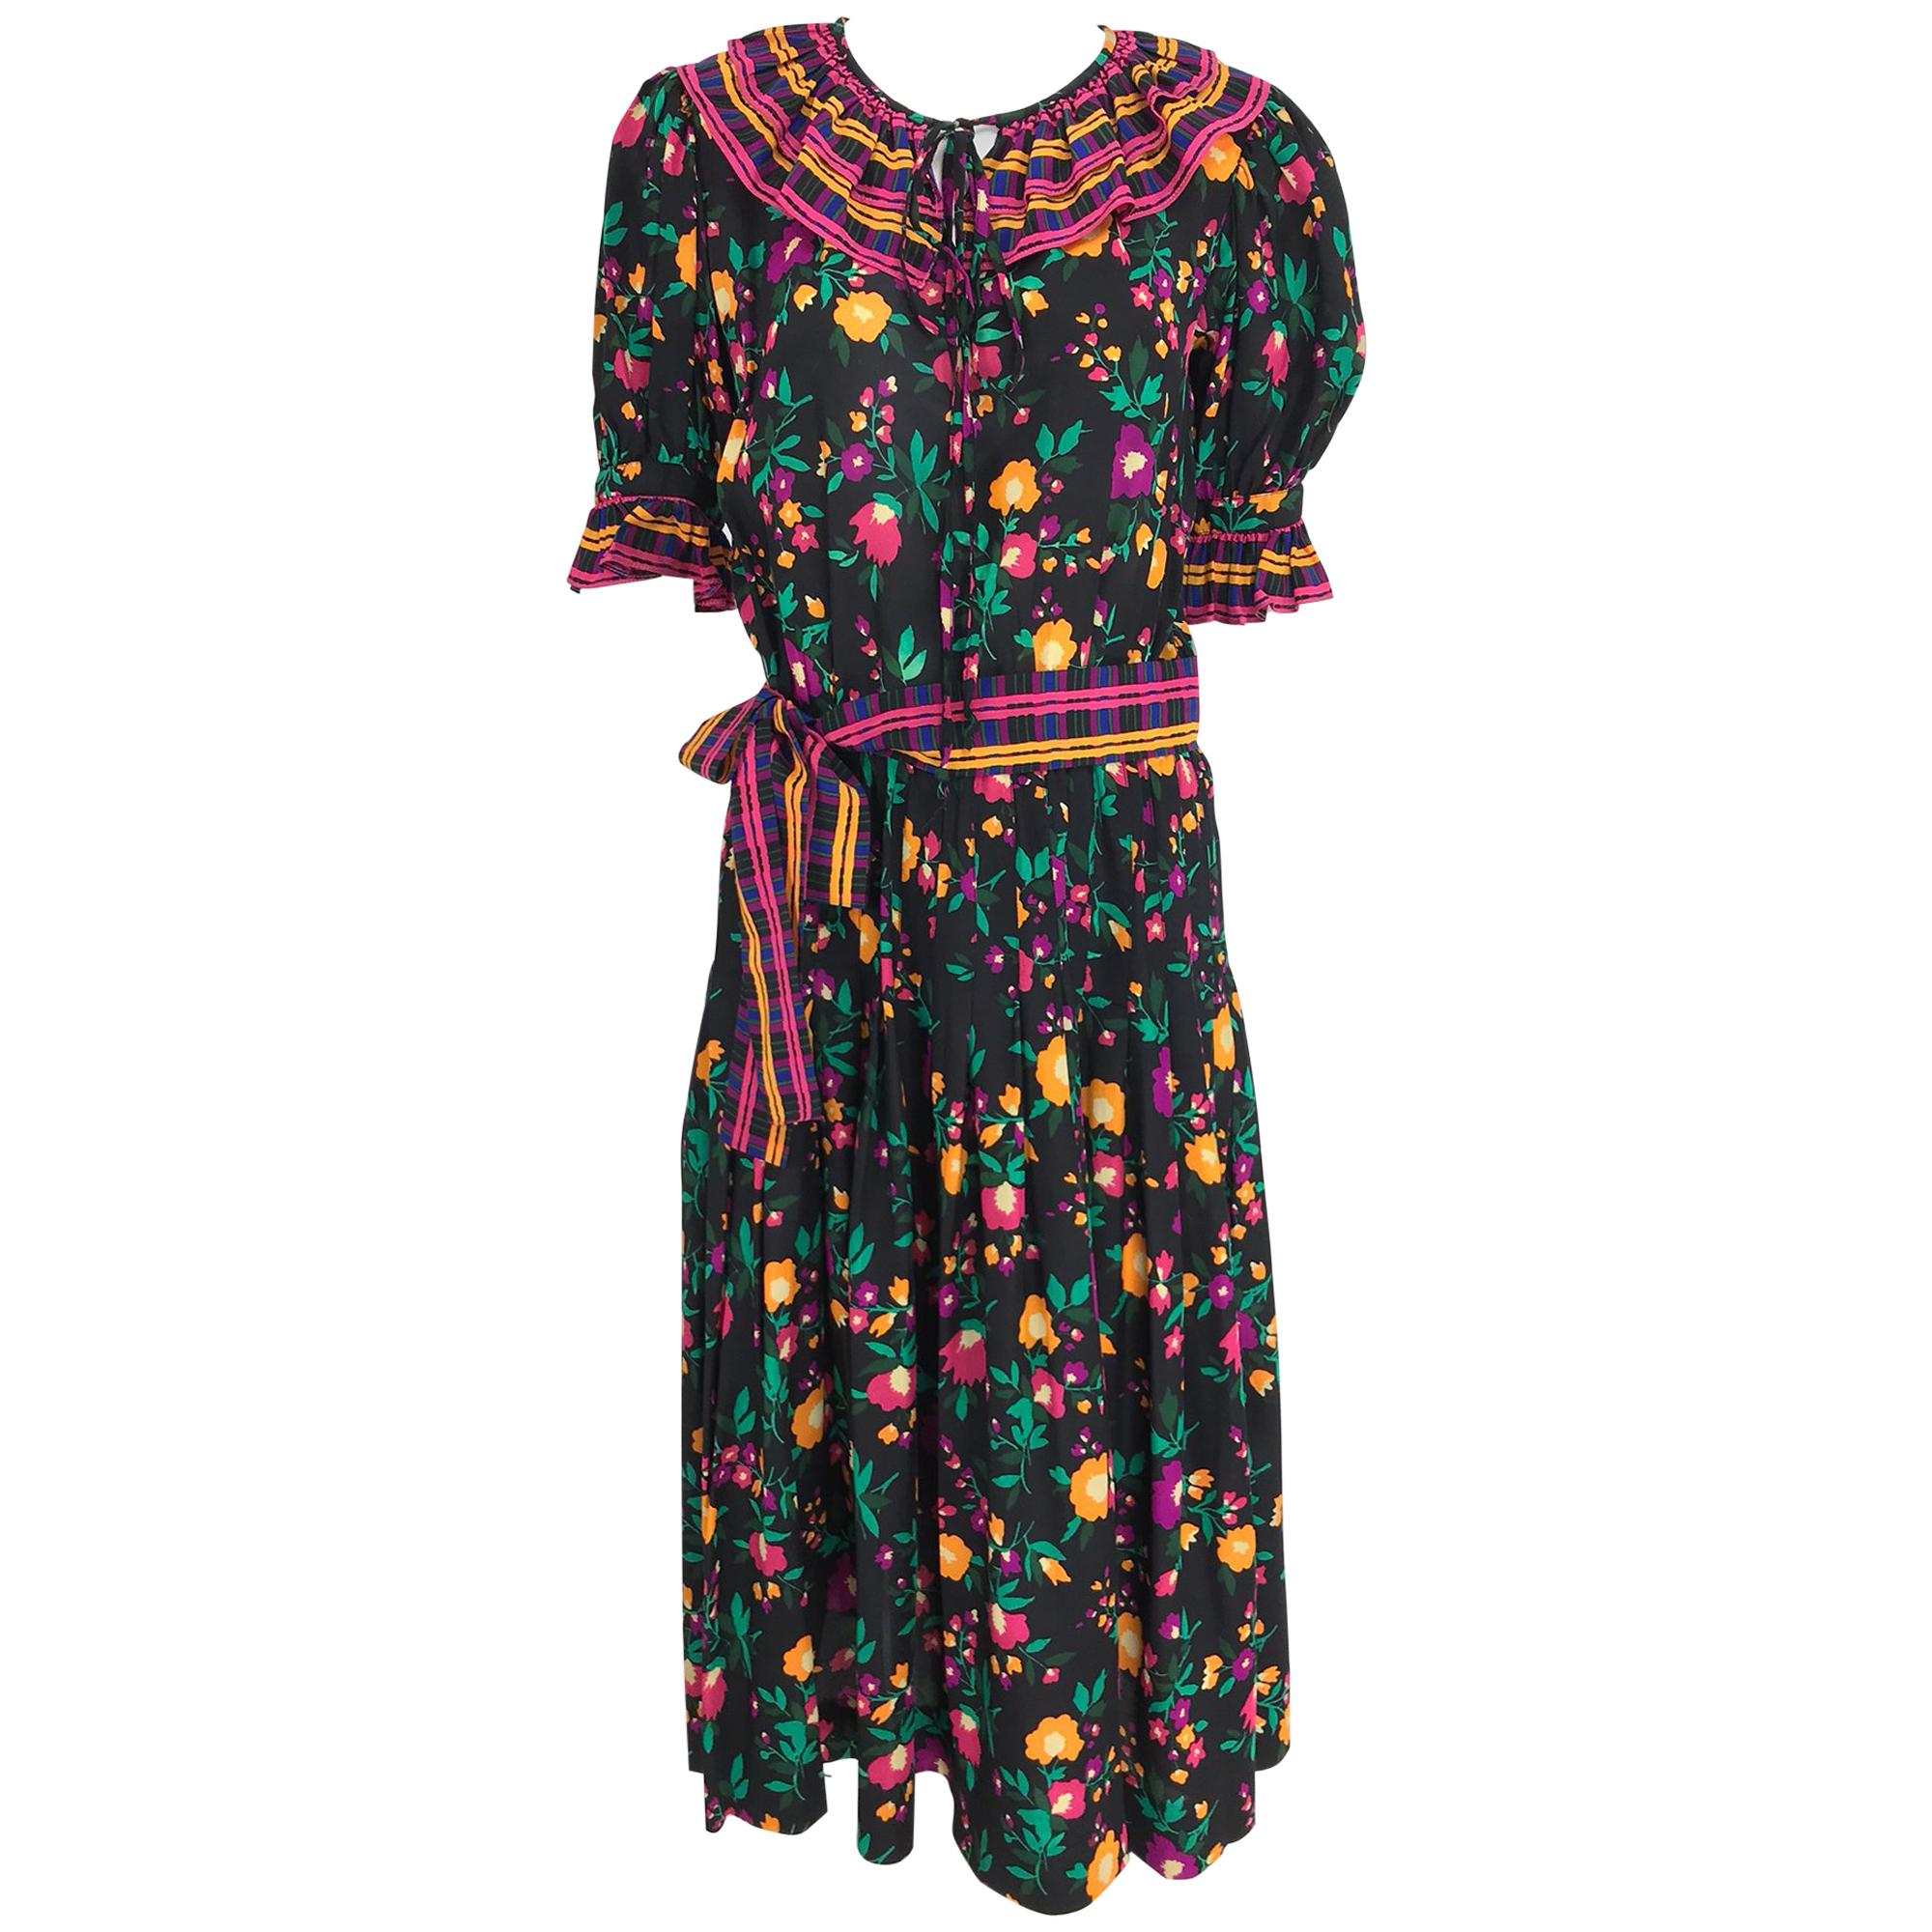 Yves Saint Laurent Rive Gauche floral silk mix print dress 1970s